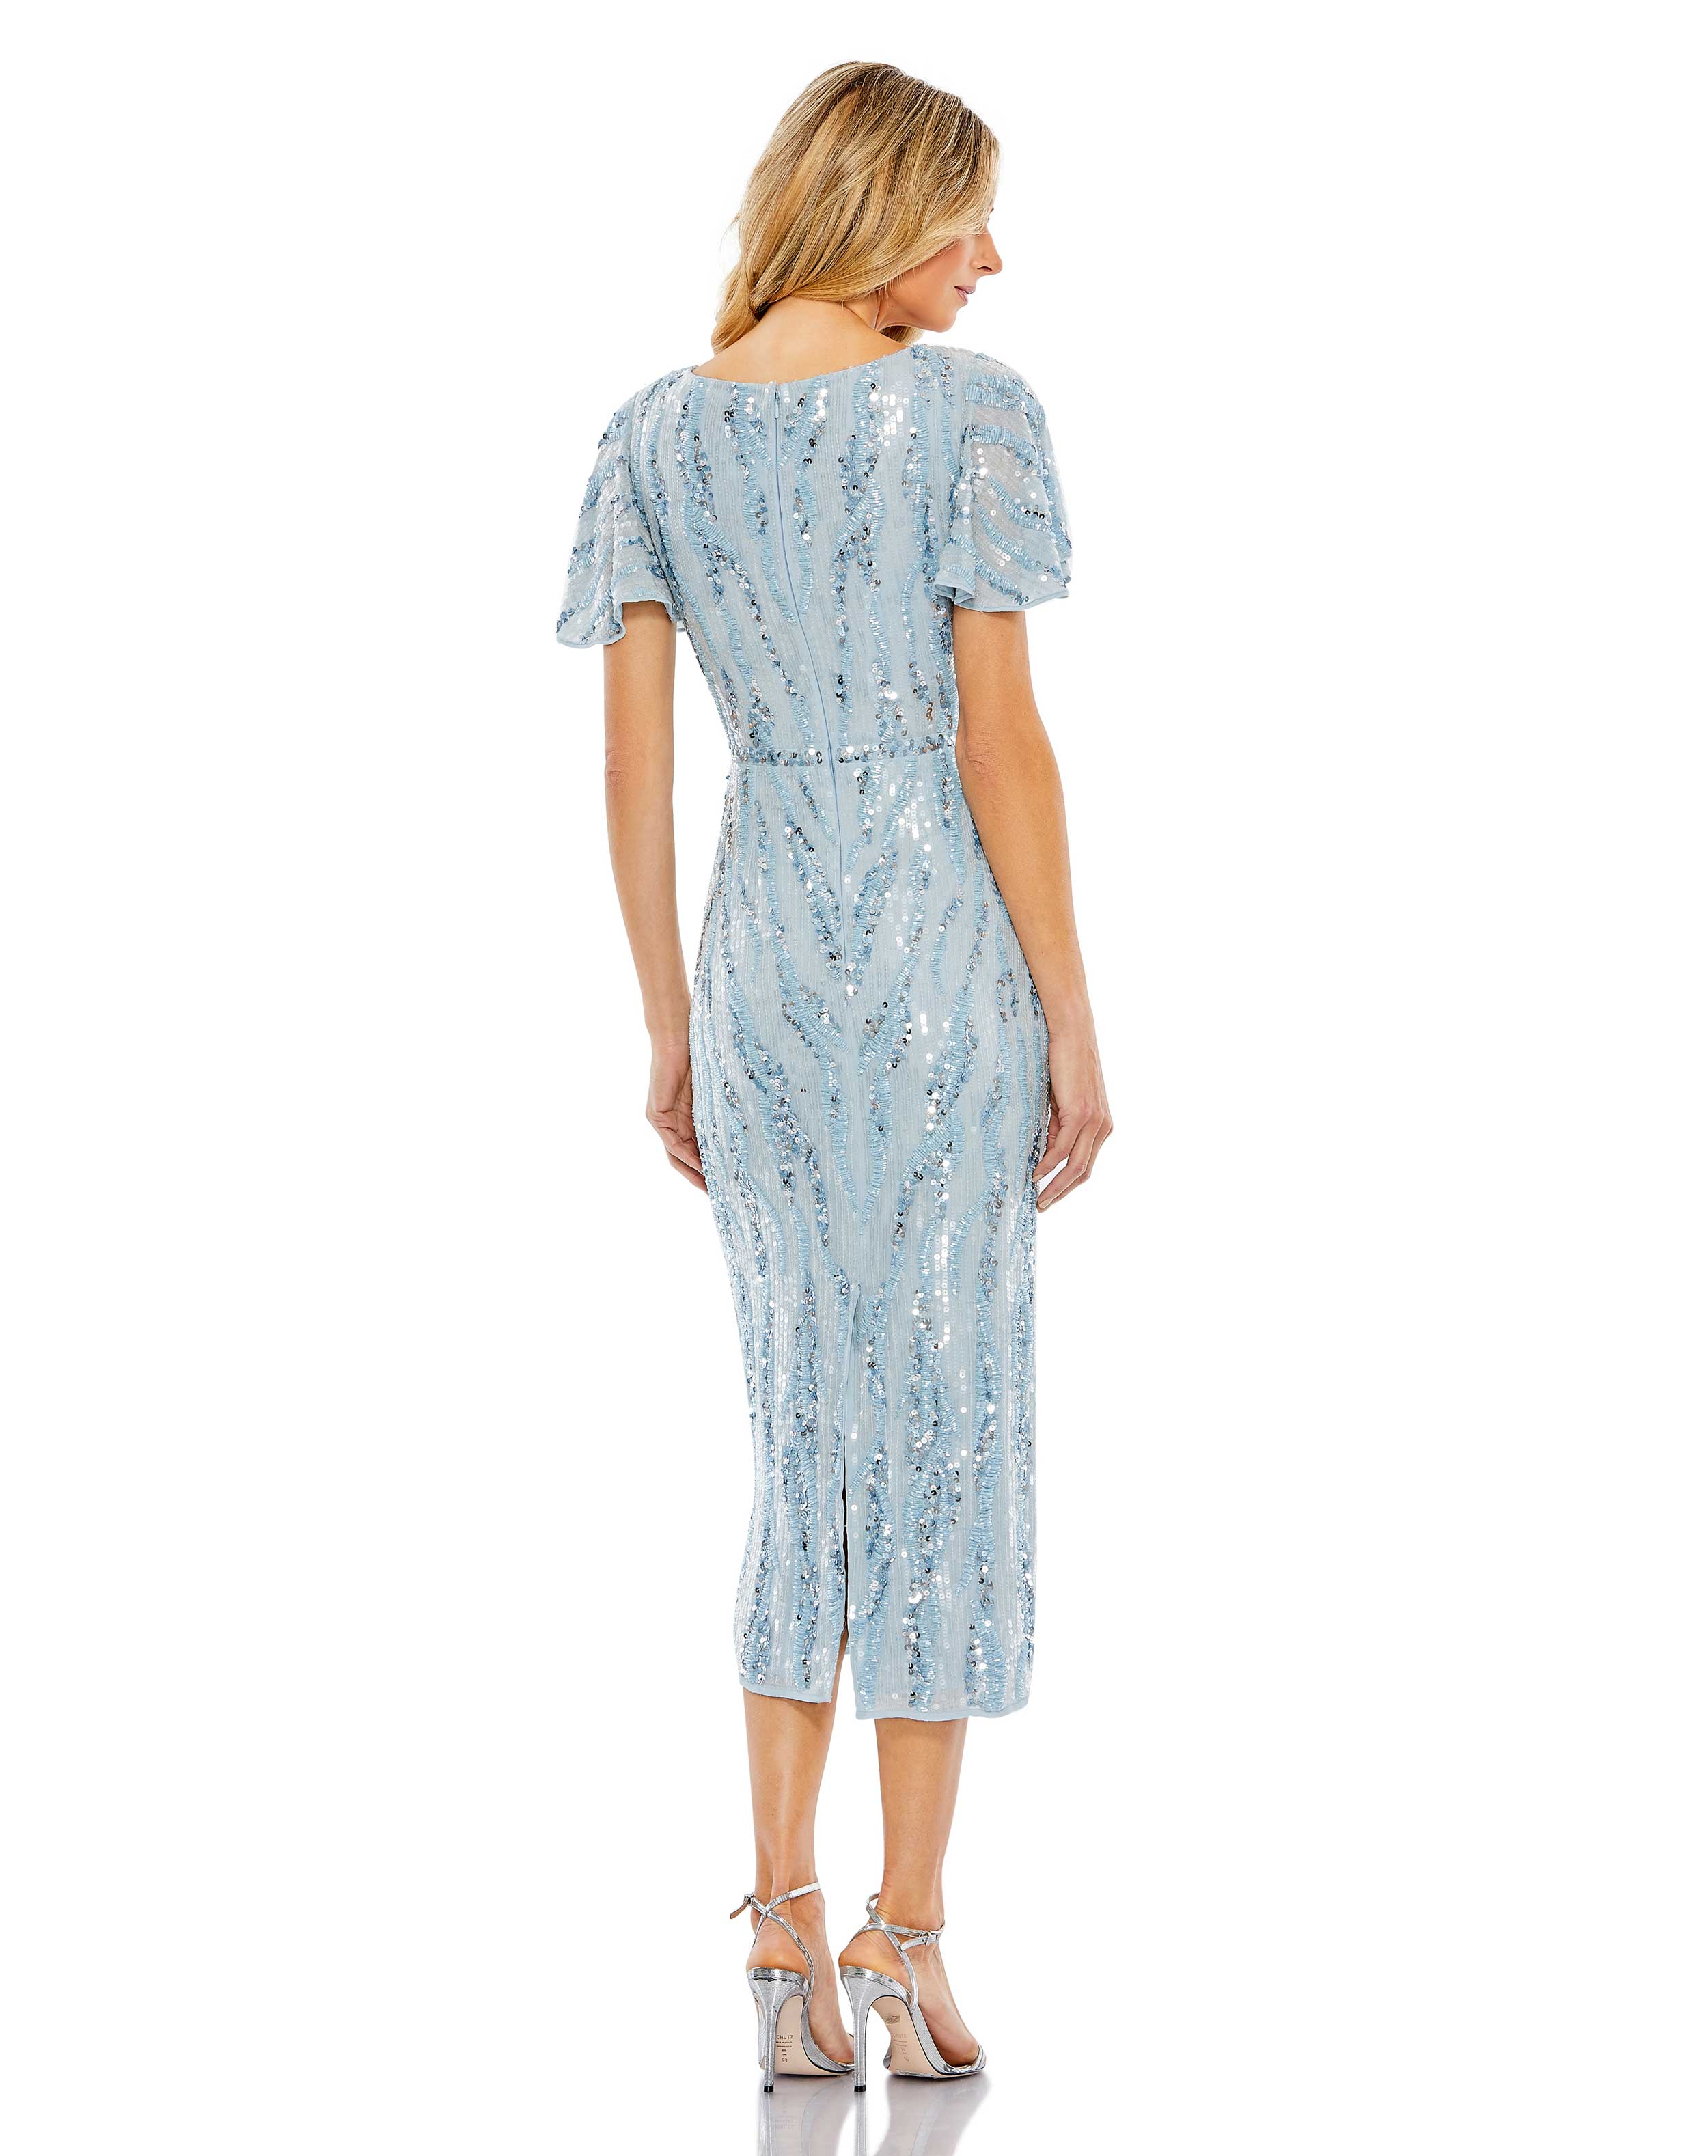 Sequined V Neck Flutter Sleeve Tea Length Dress